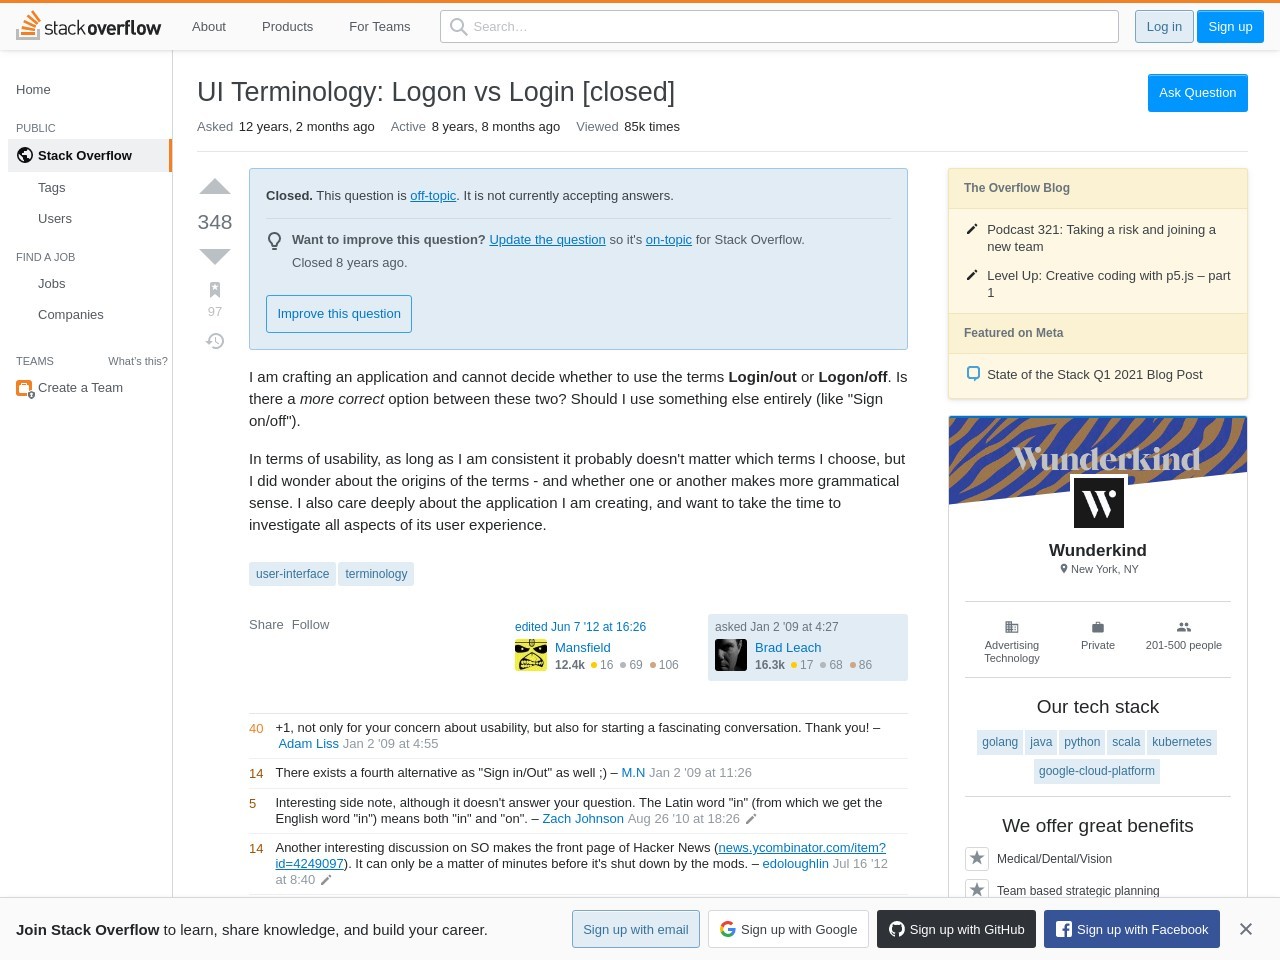 UI Terminology: Logon vs Login - Stack Overflow